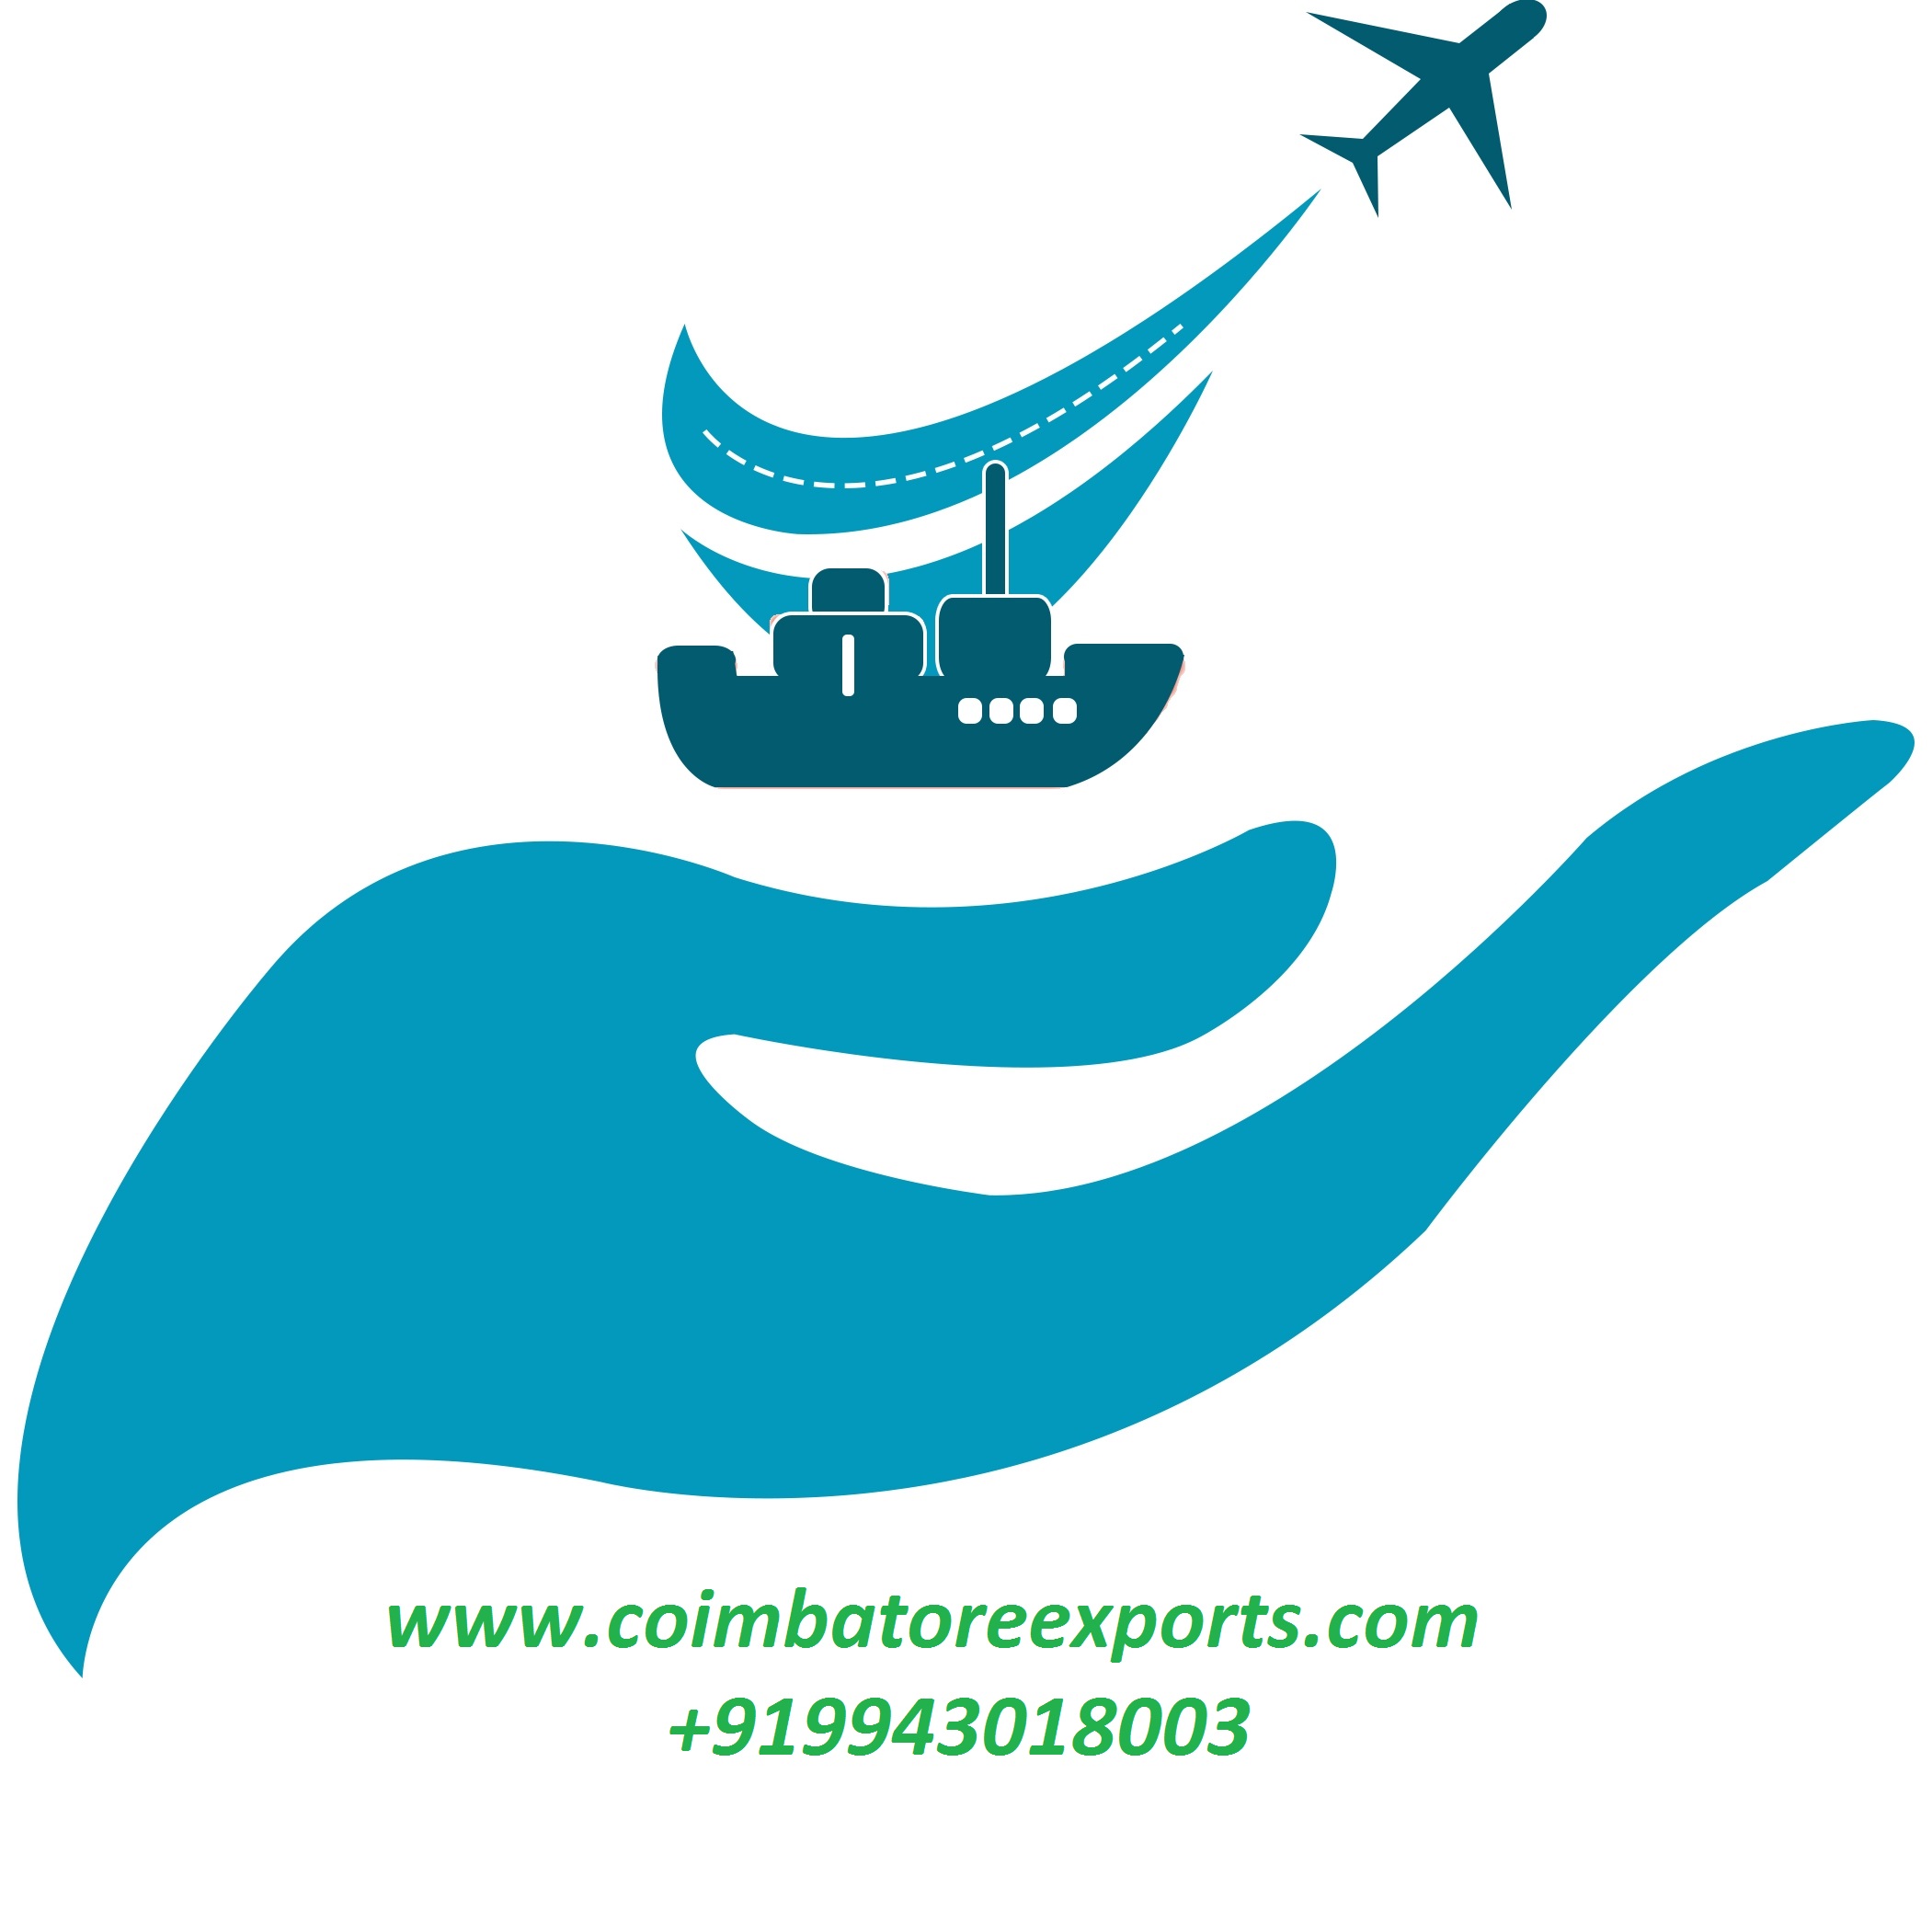 Coimbatore Exports